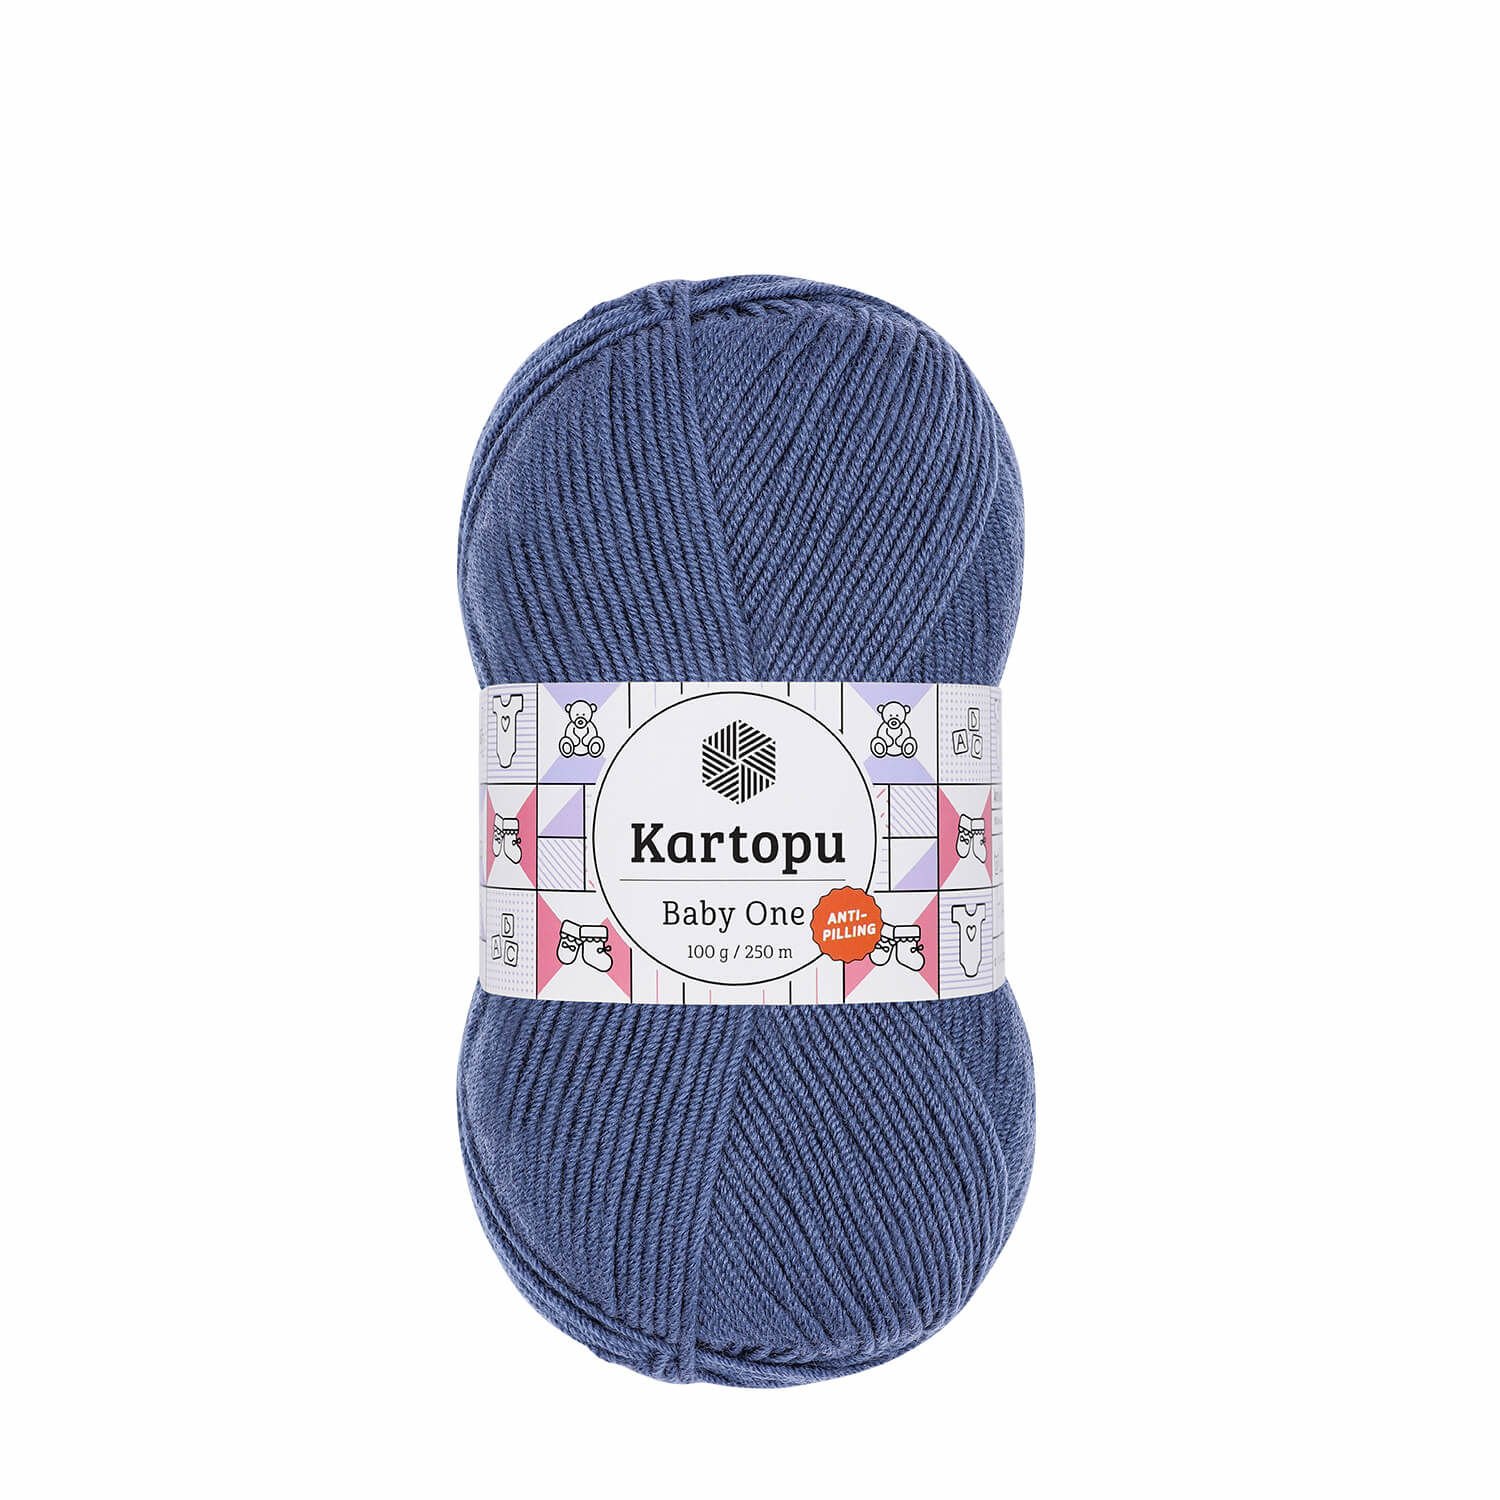 KARTOPU BABY ONE - Baby Knitting Yarn K1533 DENIM BLUE